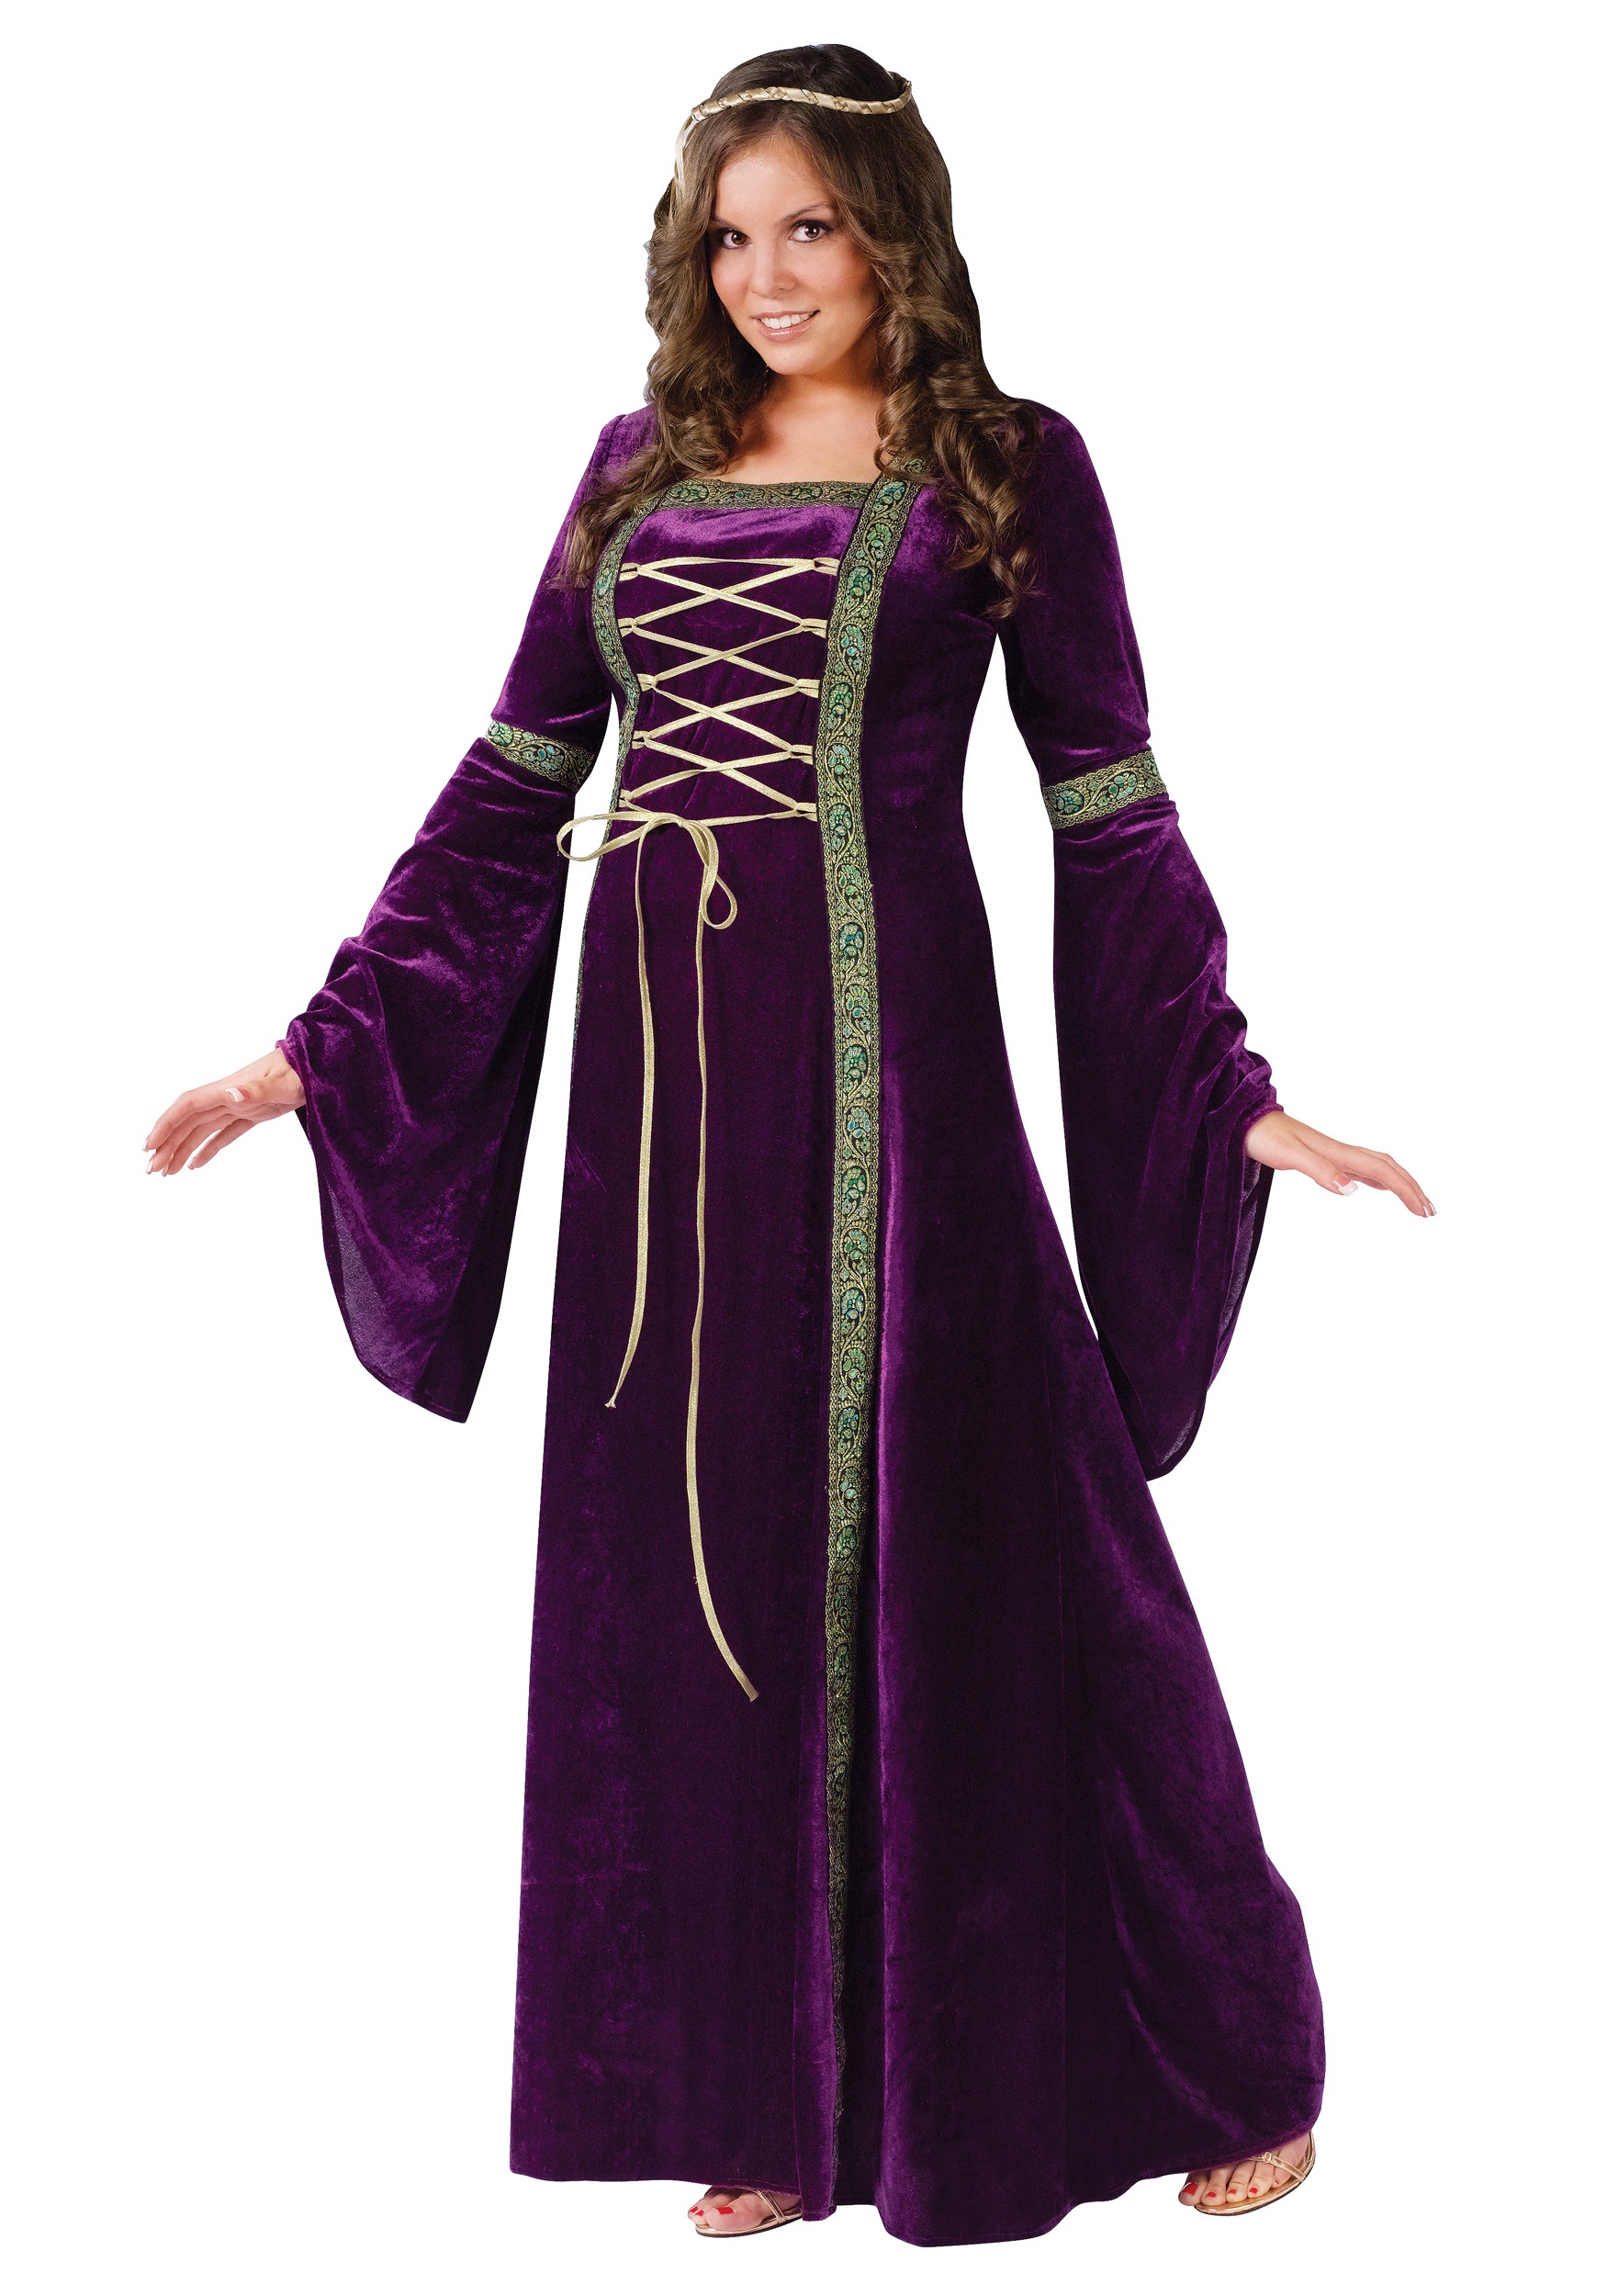 Image of Women's Plus Size Renaissance Lady Costume | Decade Costumes ID FU110015-6X